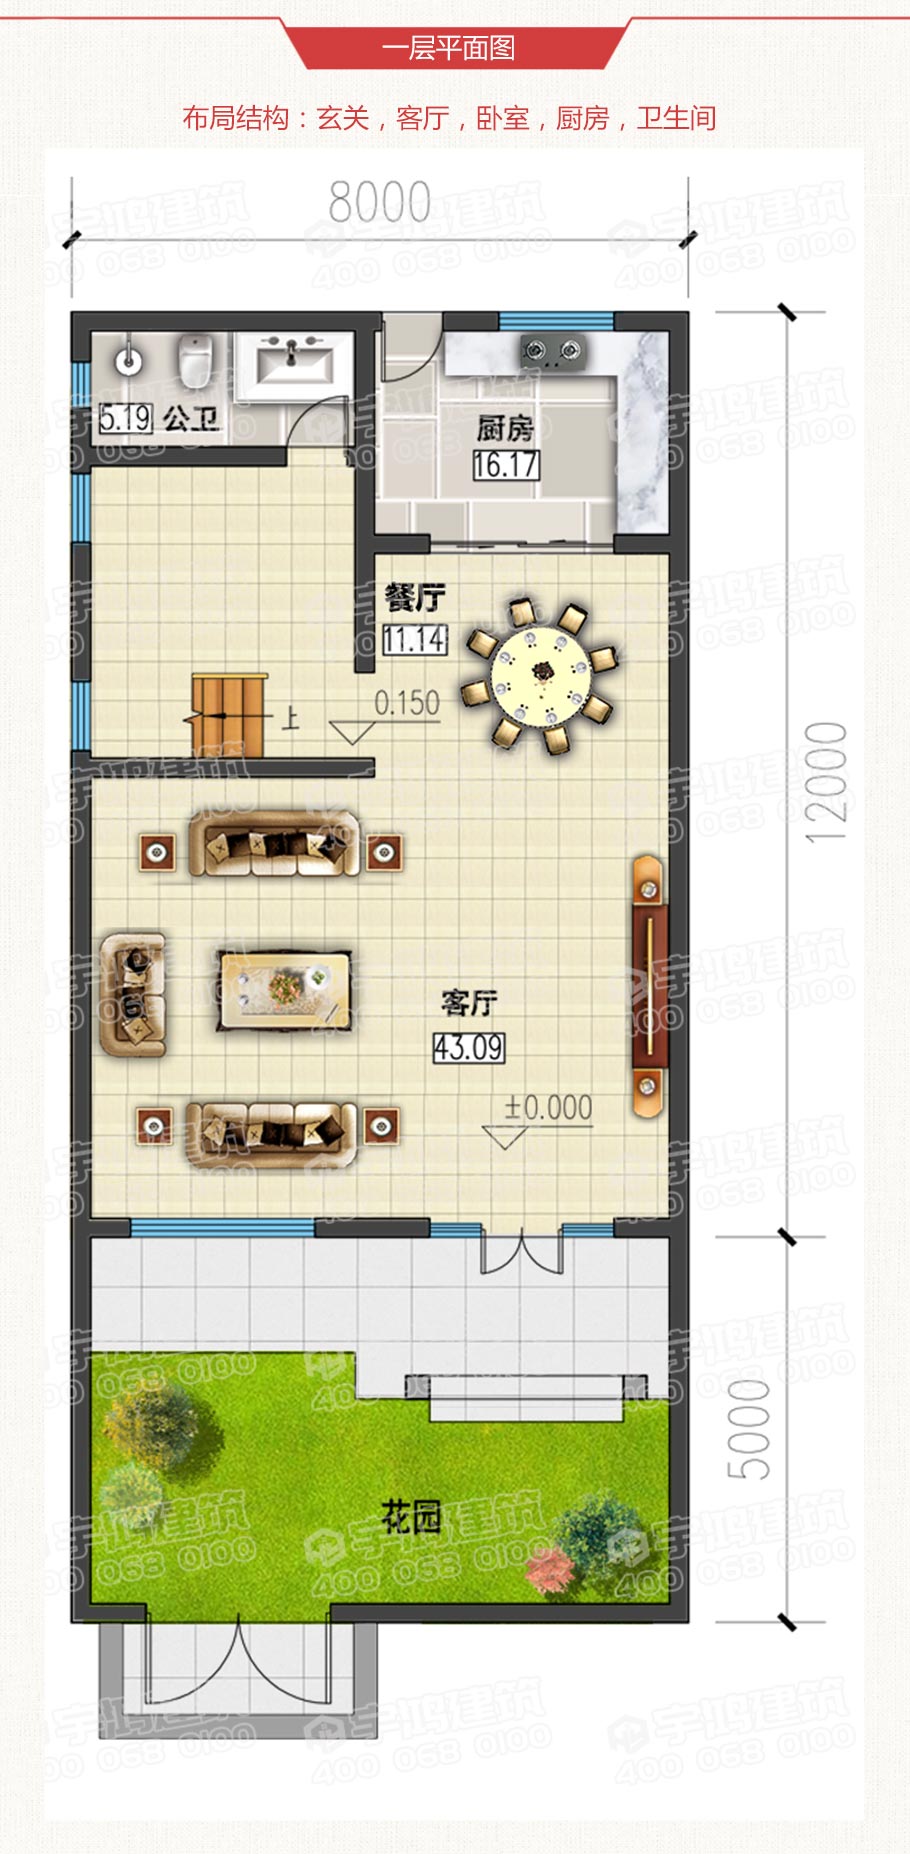 8x12米平房设计图纸，合理利用空间，户型简单实用，适合农村建房实际